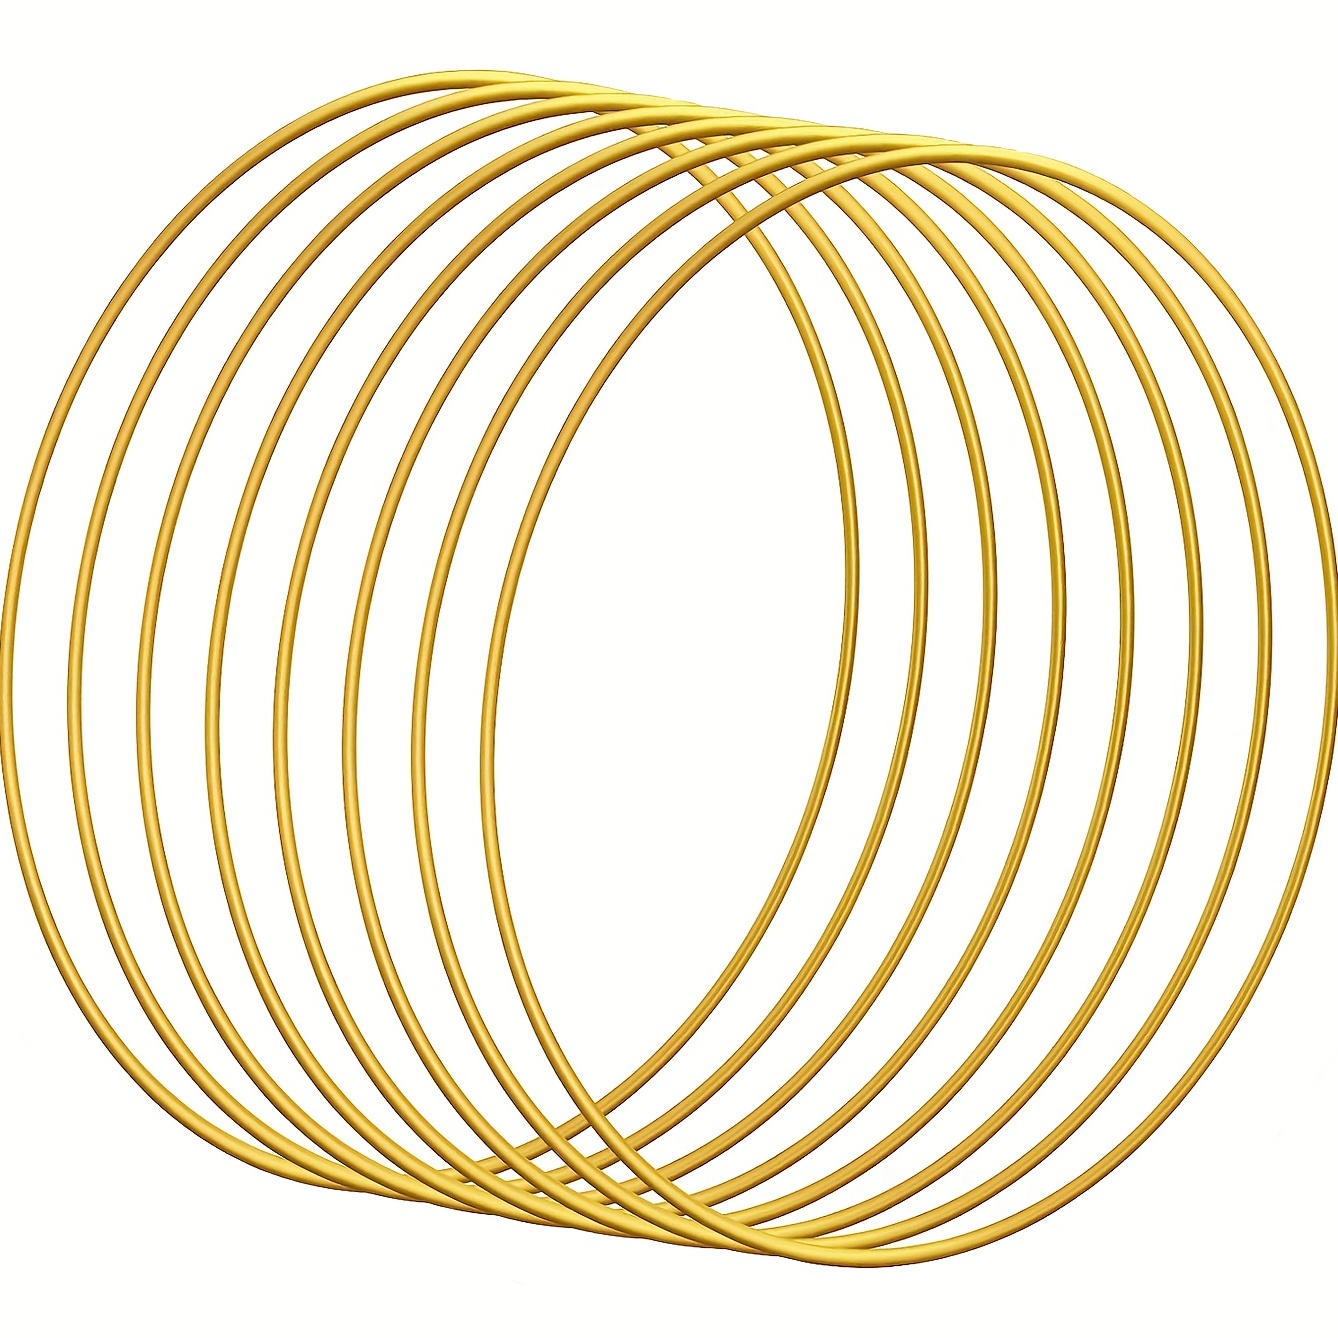 10pcs metal craft hoops Dream catcher rings hoops for craft DIY